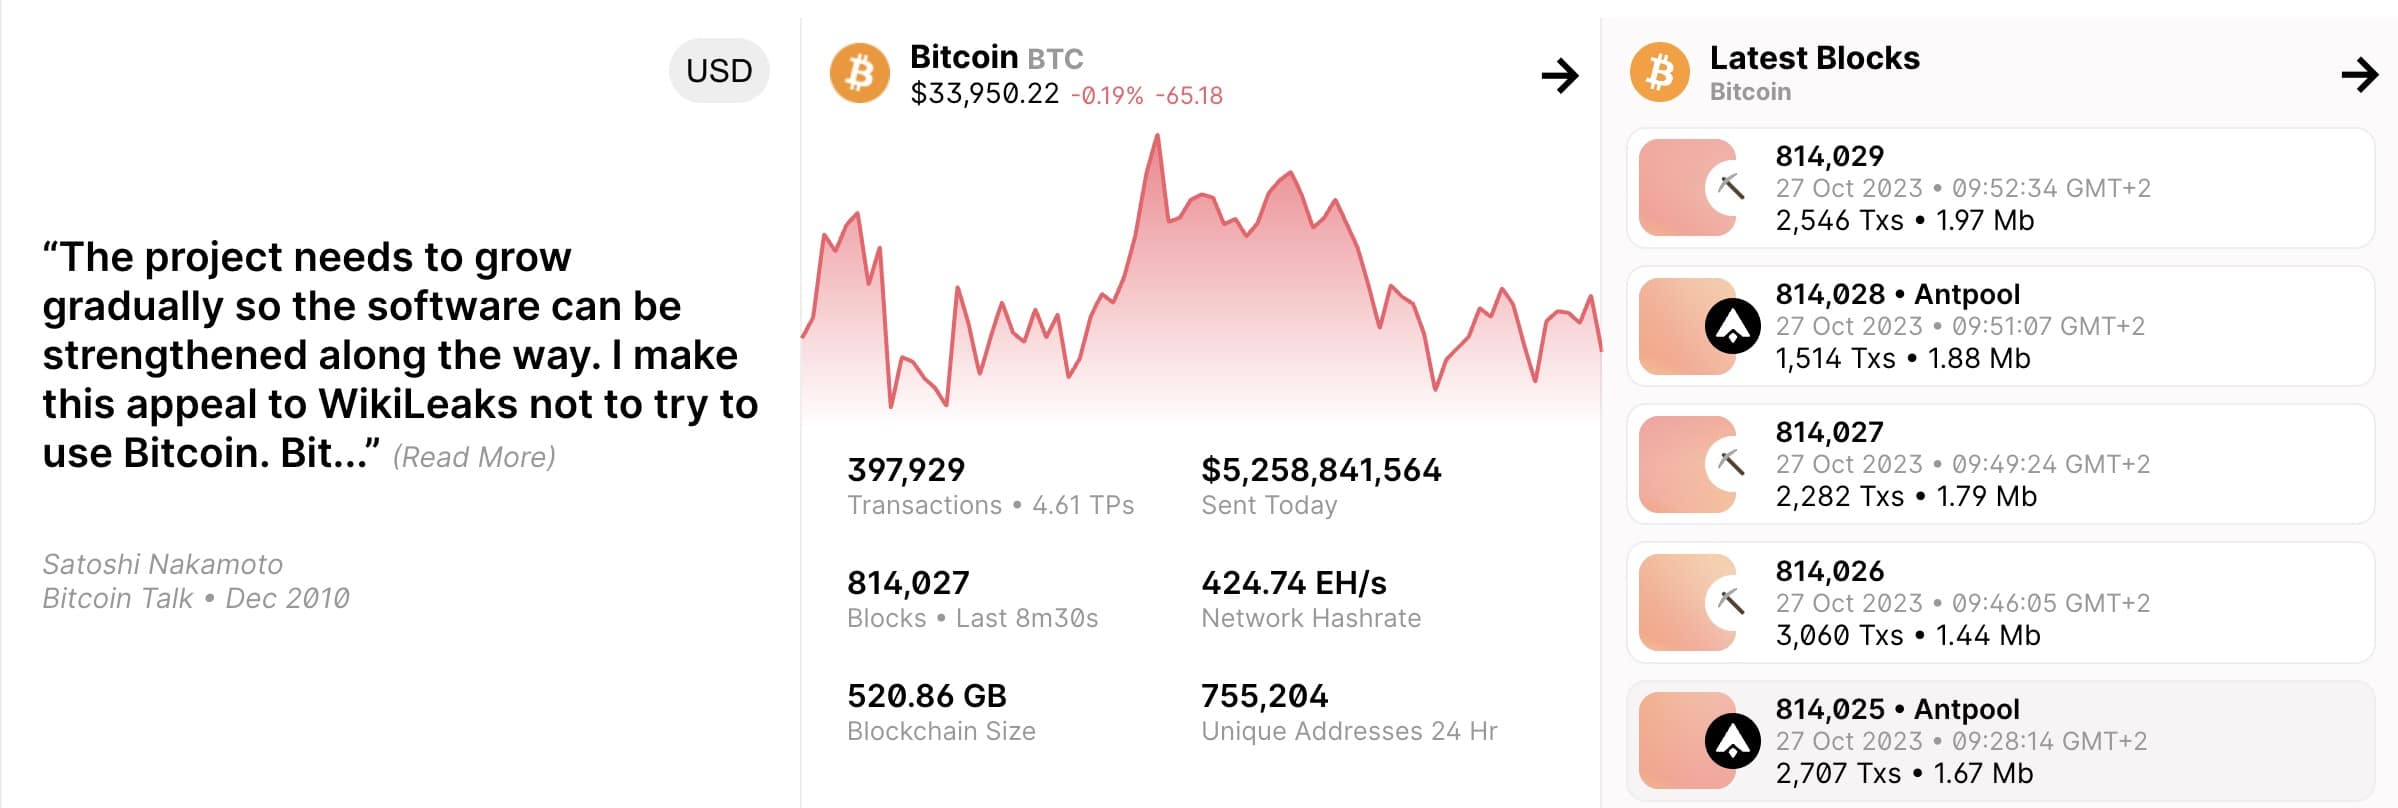 Bitcoin's stats on a block explorer